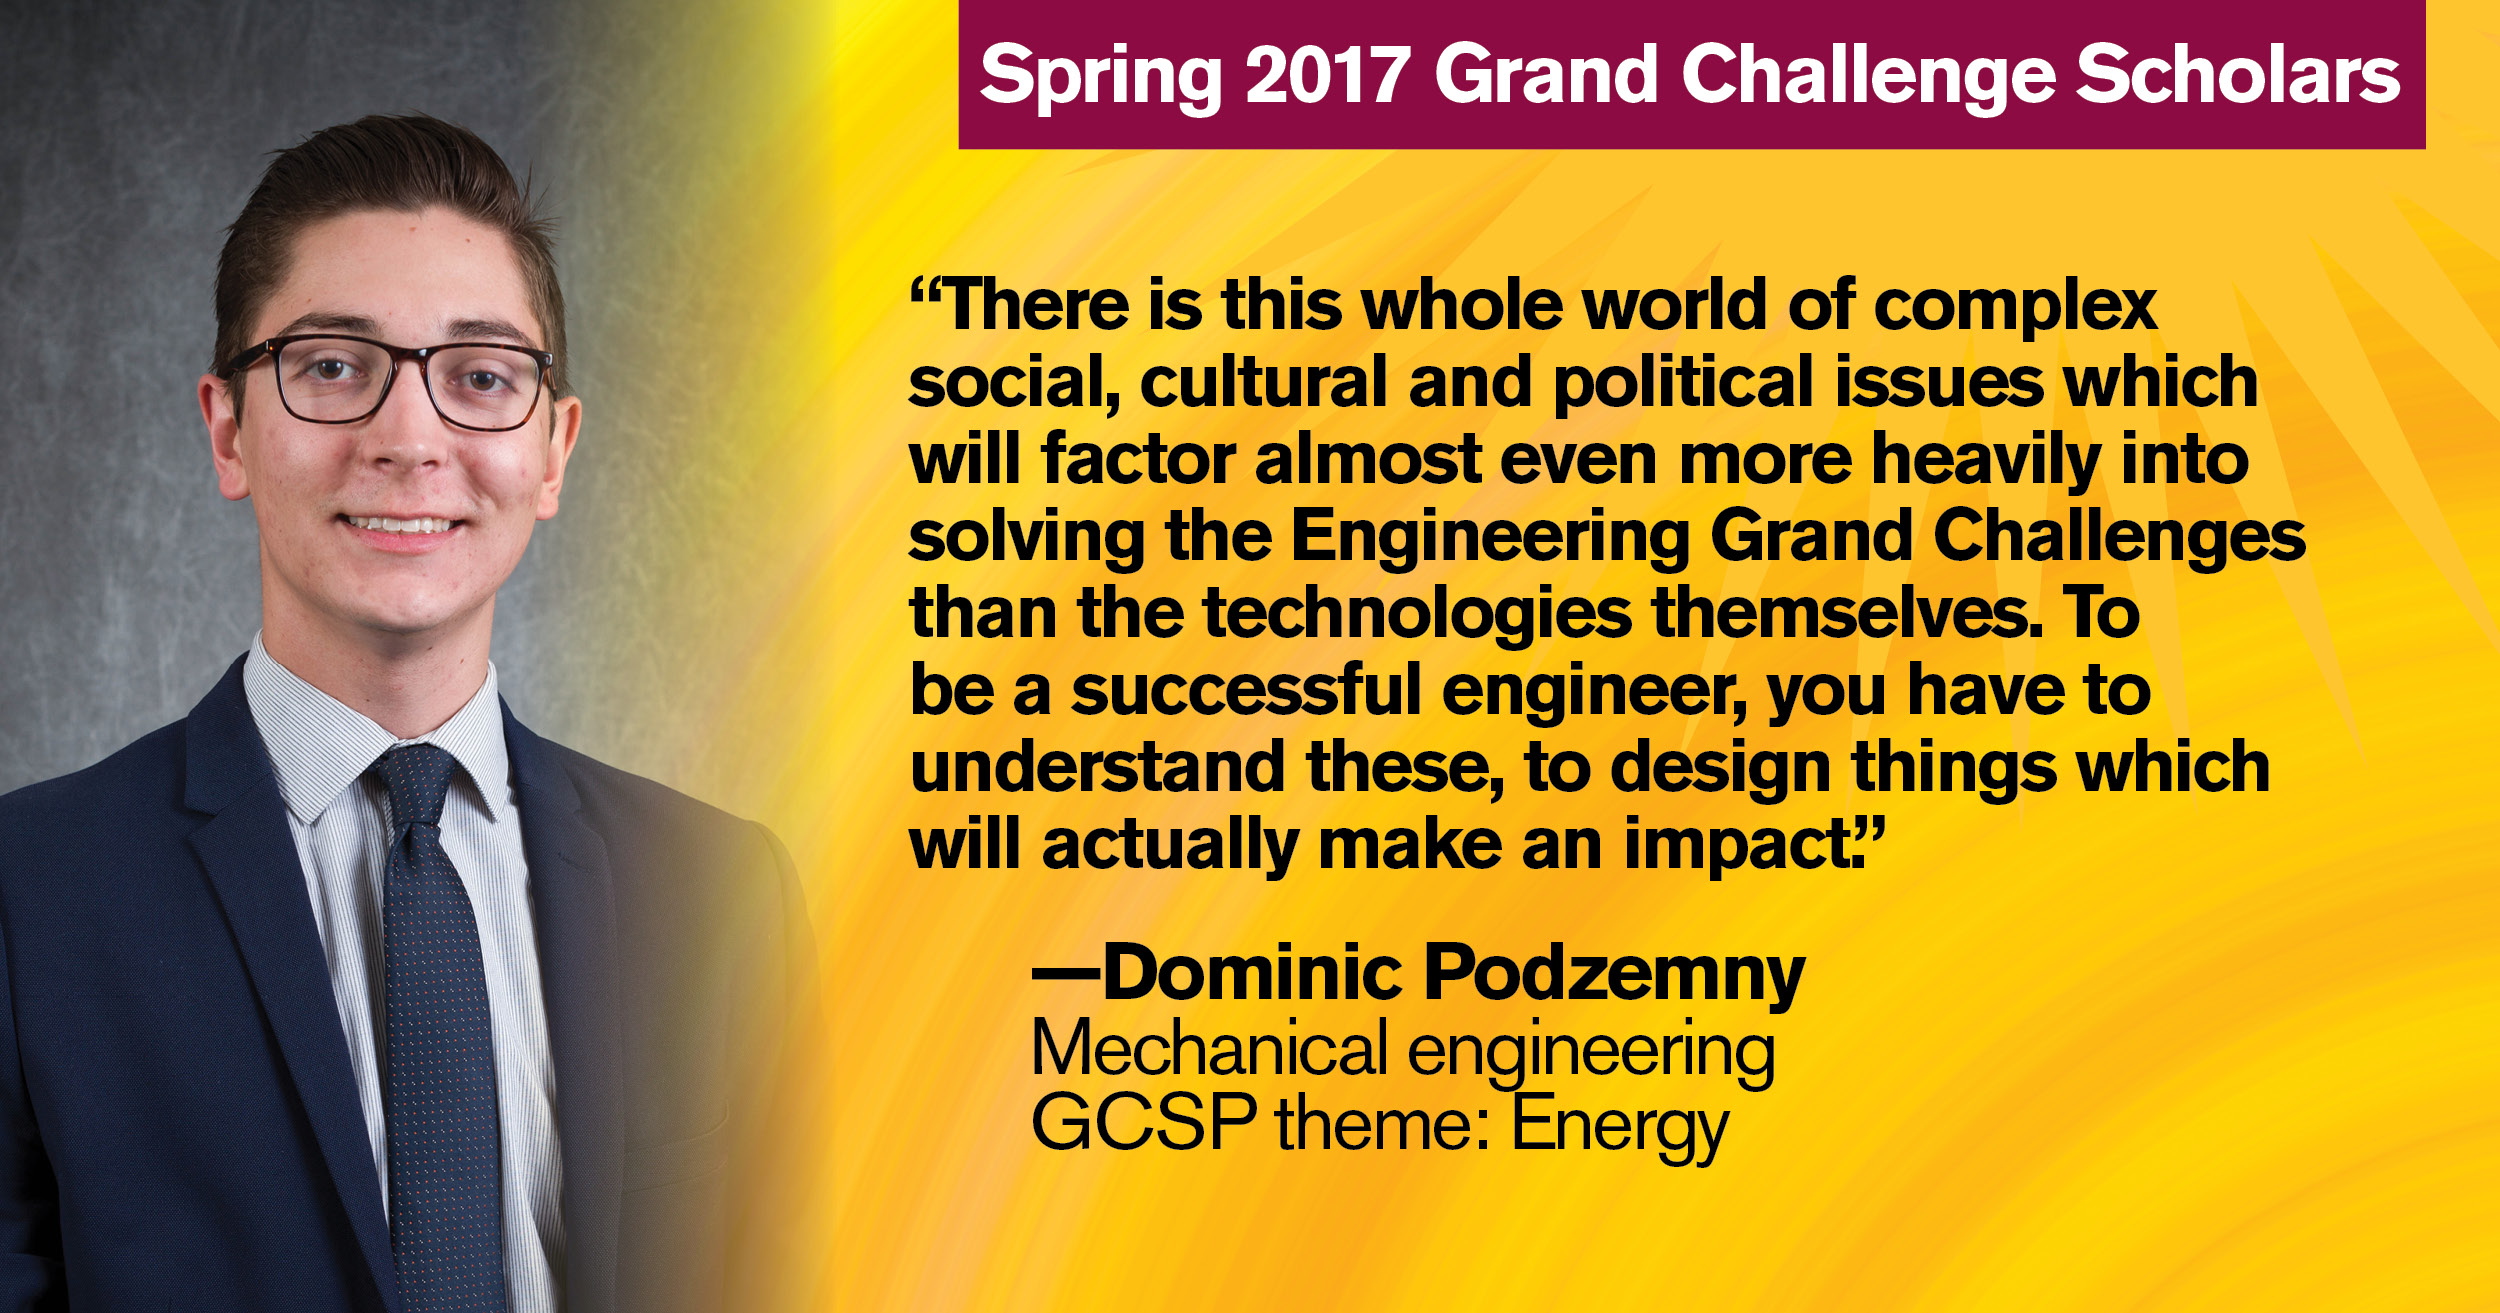 Spring 2017 Grand Challenge Scholar Dominic Podzemny